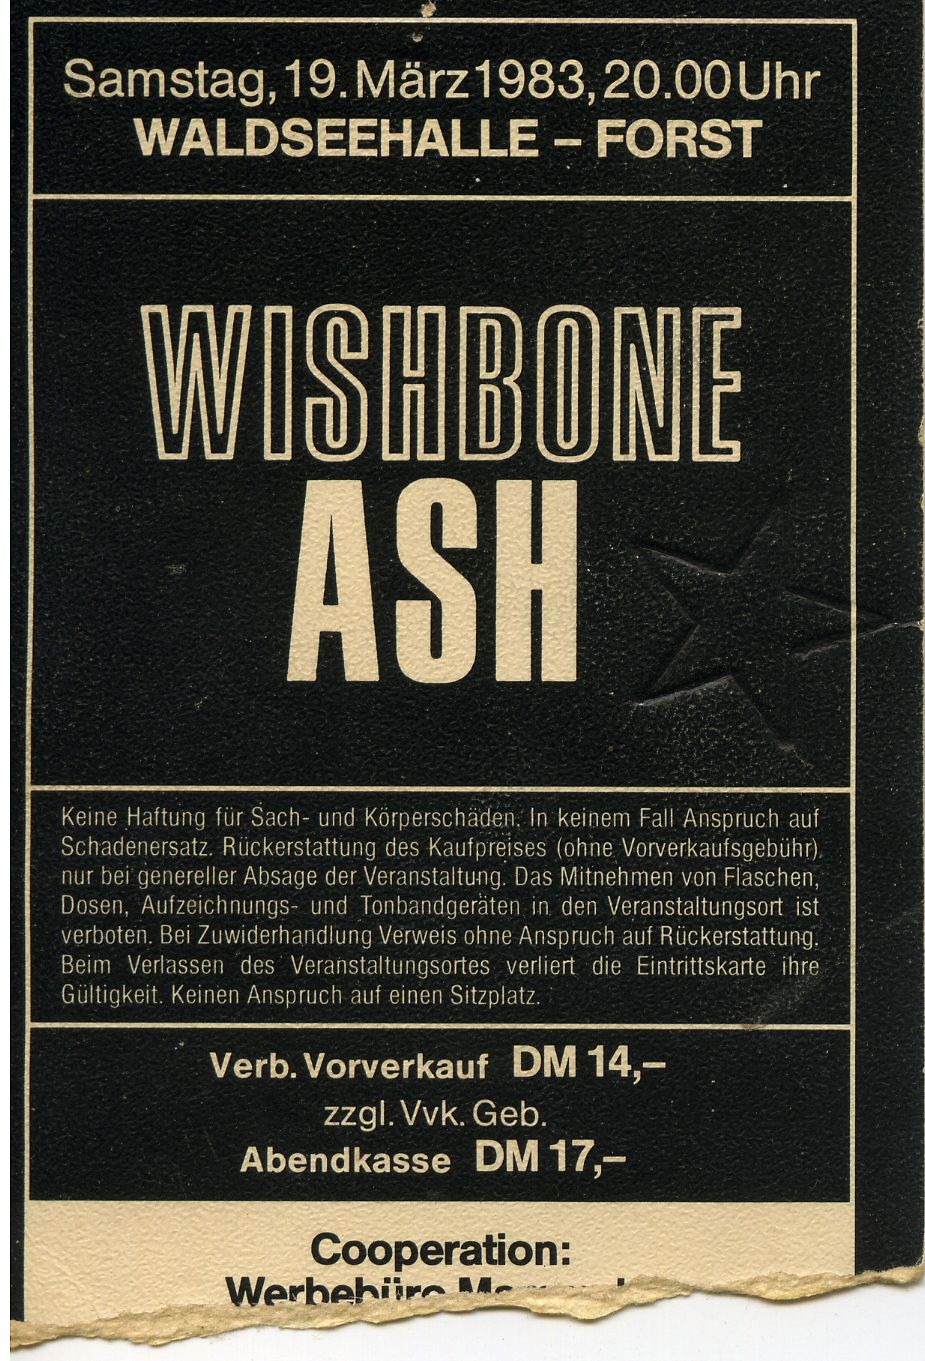 Wishbone Ash 1983 Forst.jpg